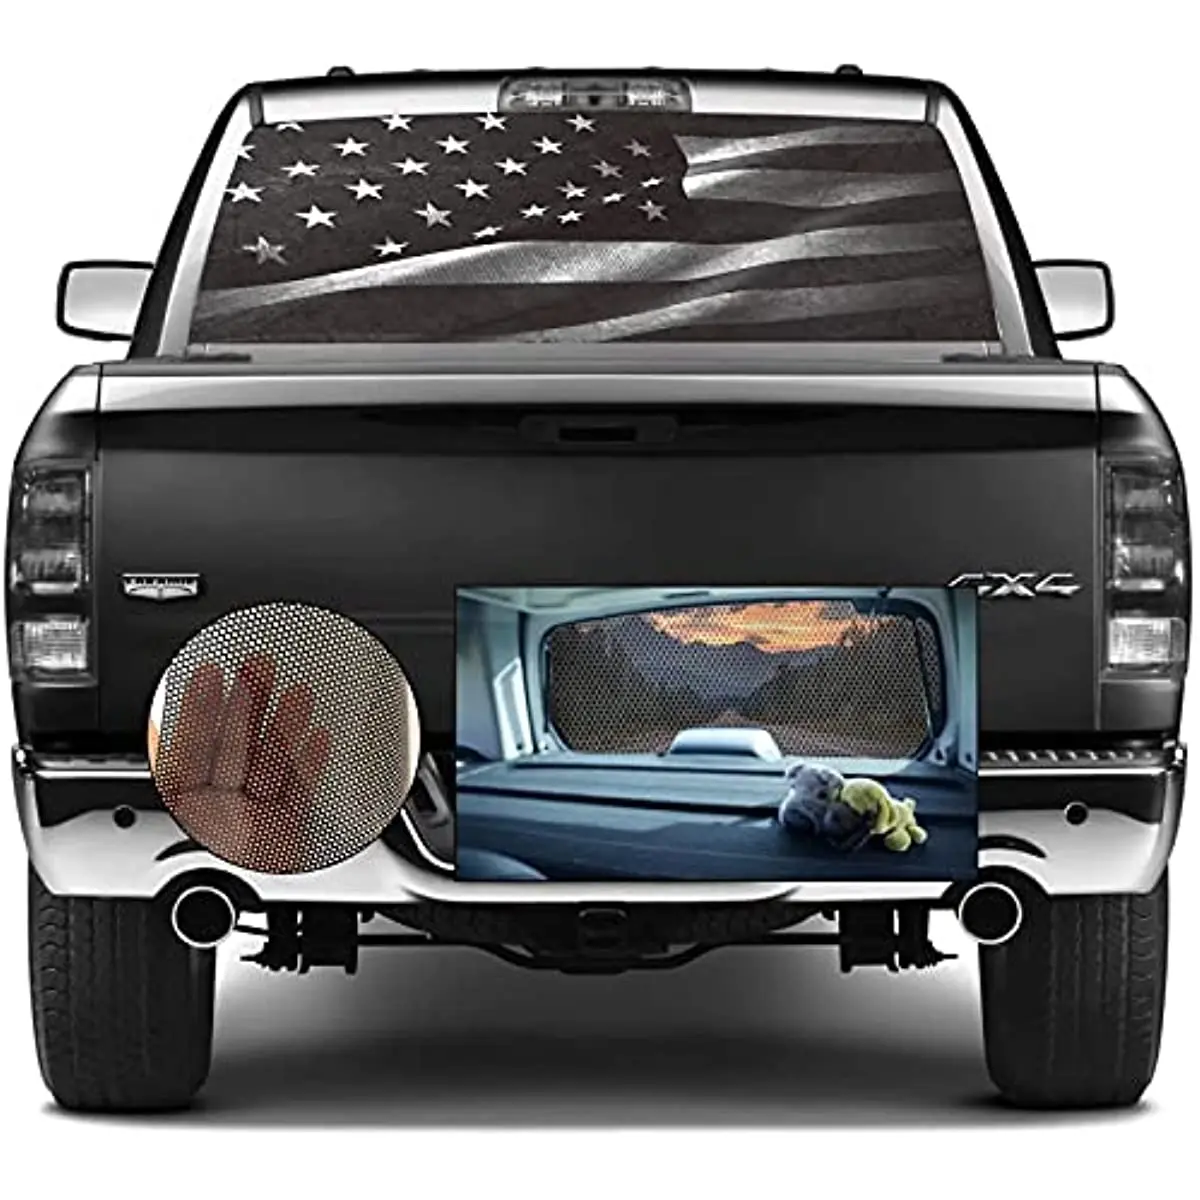 Графические наклейки с американским Флагом на заднем Стекле грузовика, Наклейки На Окна грузовика Patriot, Графика На заднем стекле-Размер 66 